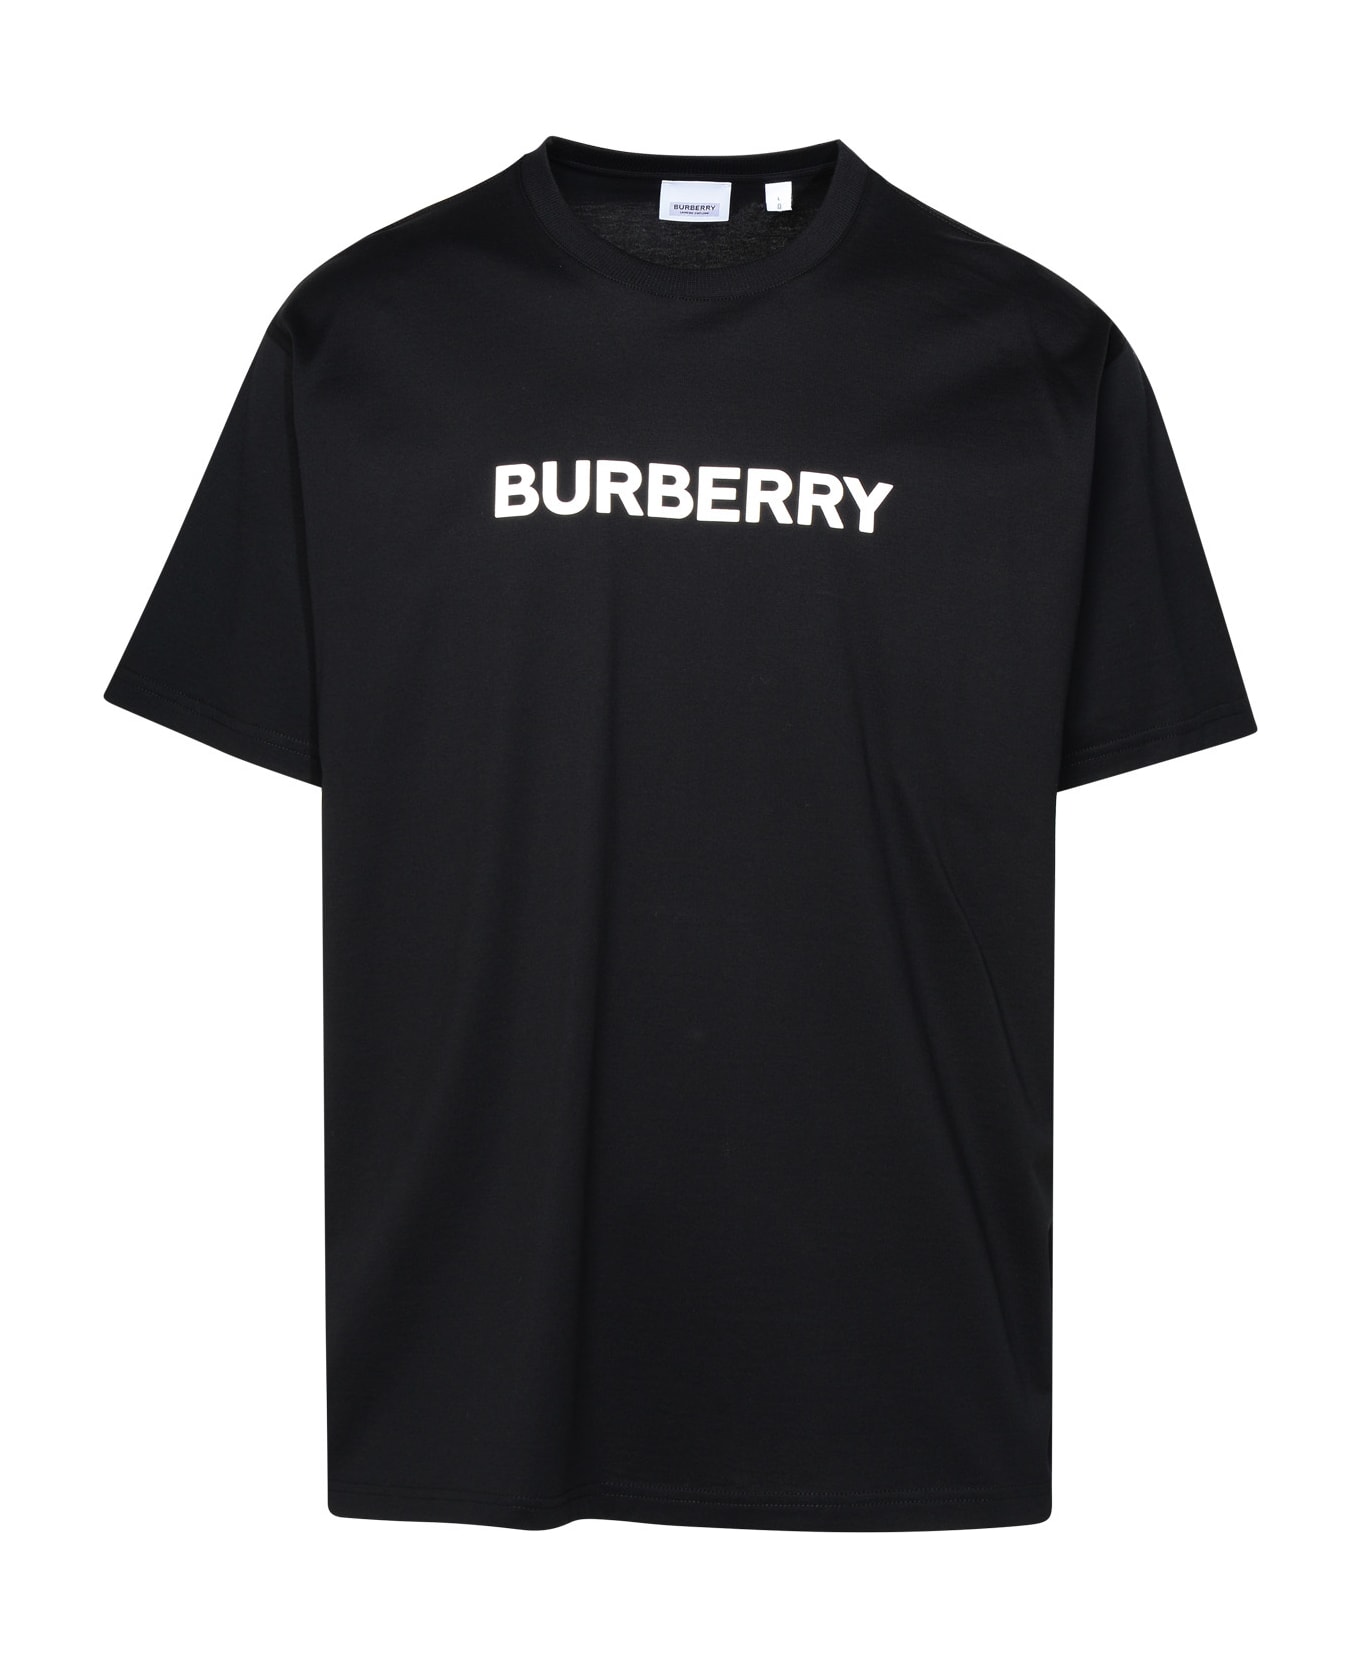 Burberry Black Cotton T-shirt - Black